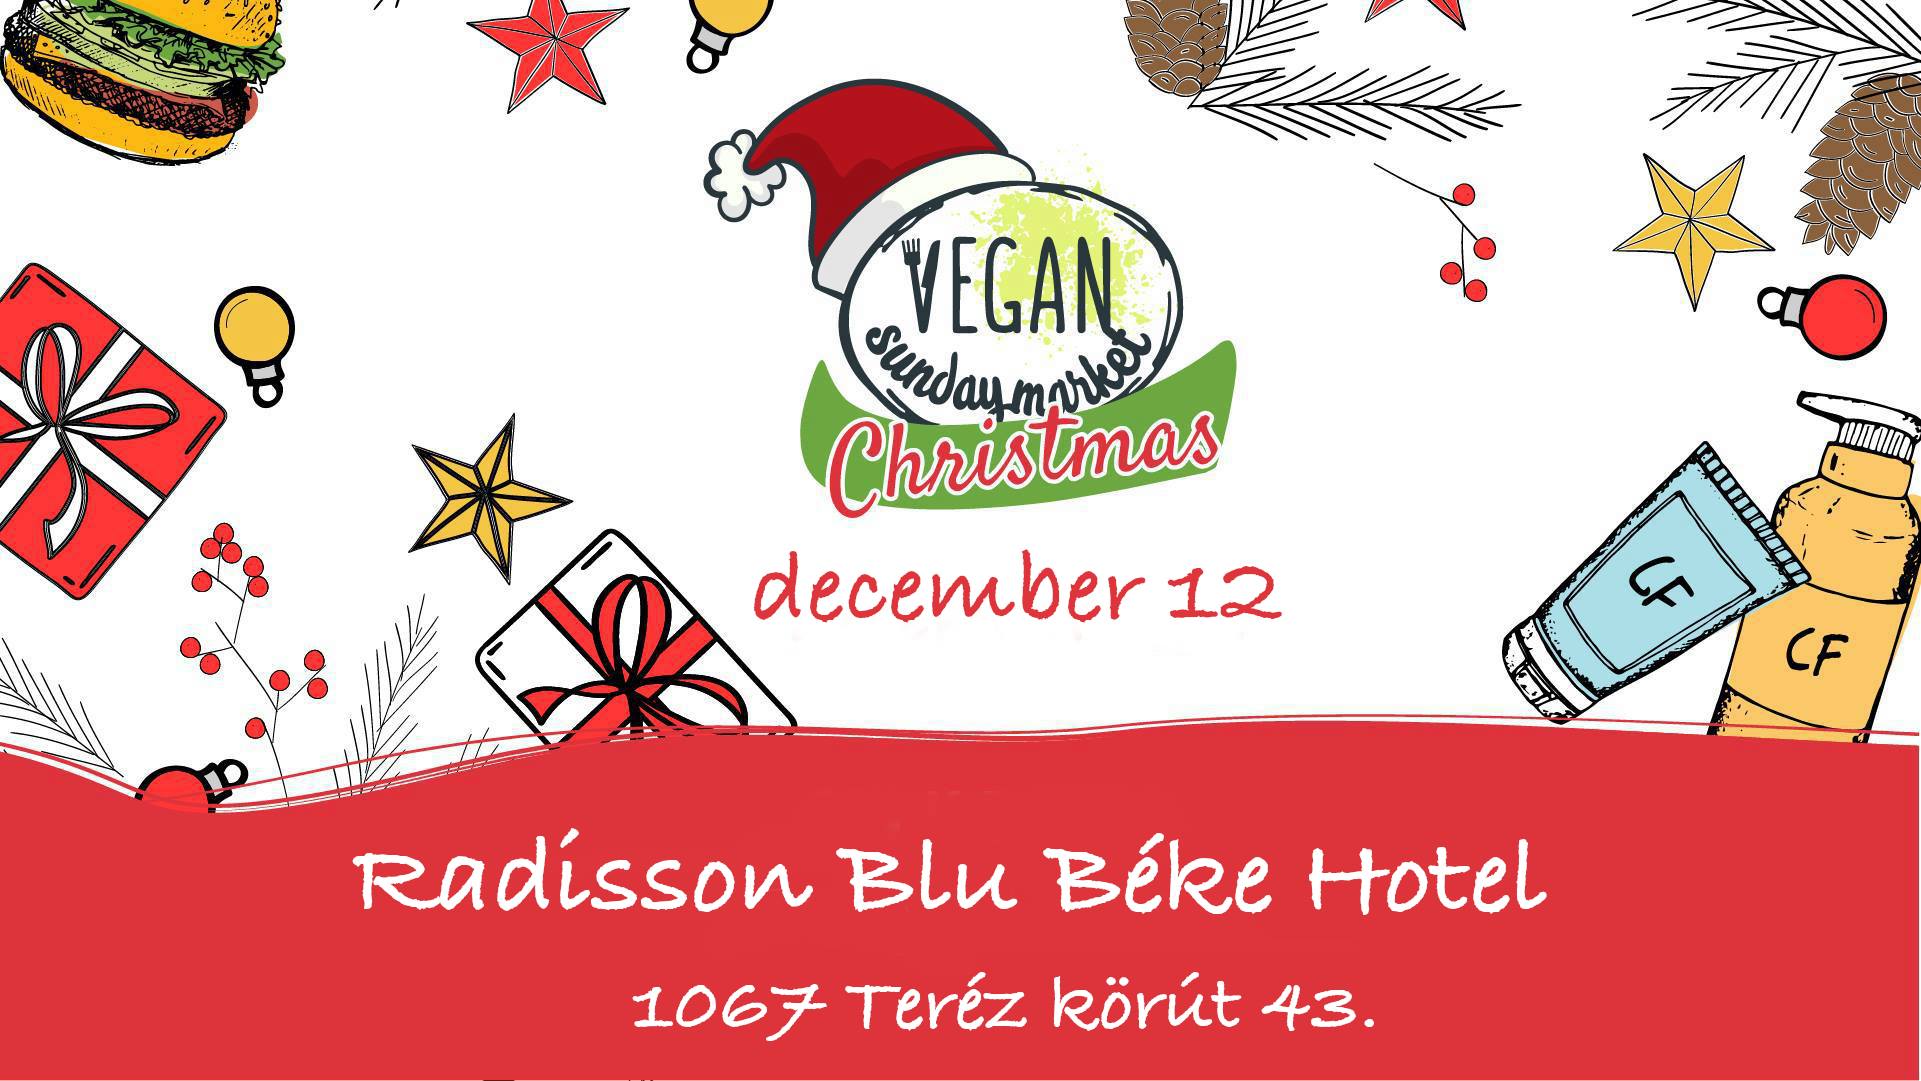 Vegan Sunday Christmas Market, Radisson Blu Béke Hotel, Budapest, 12 December